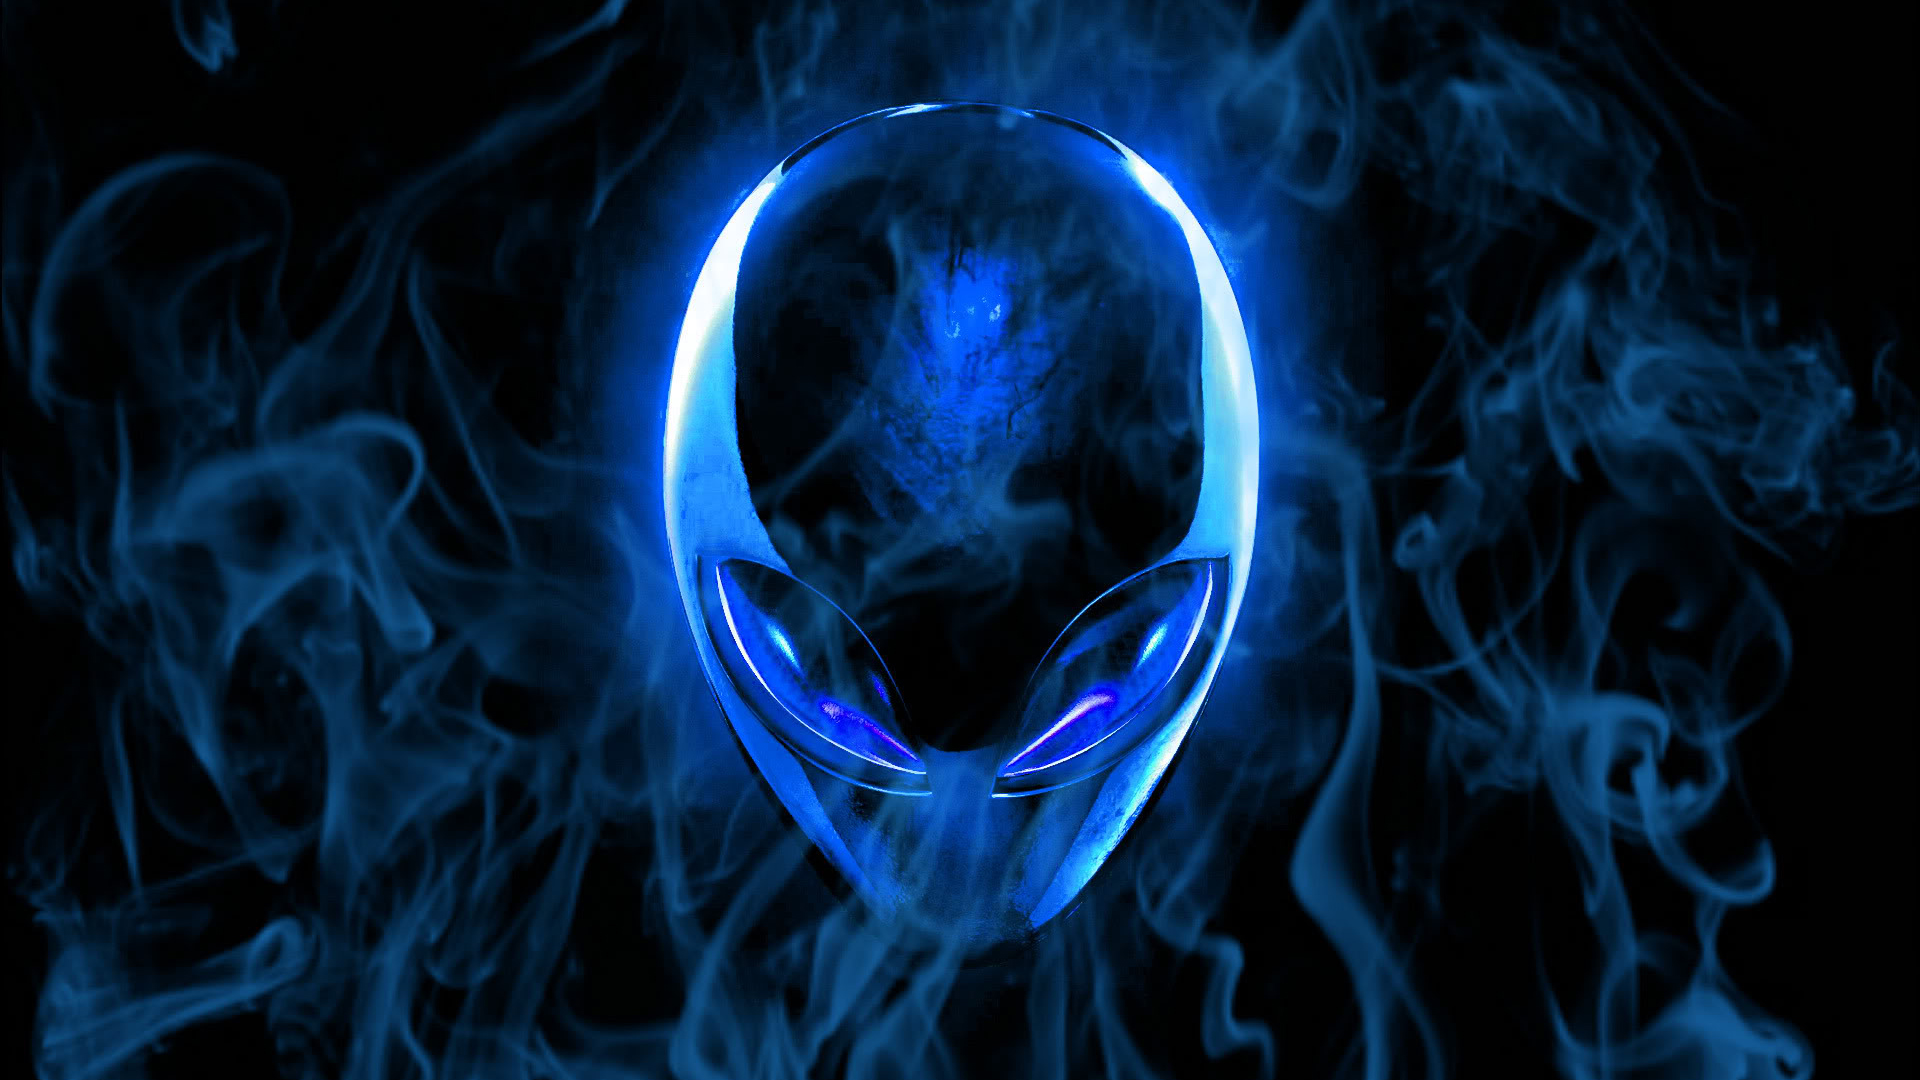 alienware dark blue logo smoky hd 1920x1080 1080p wallpaper